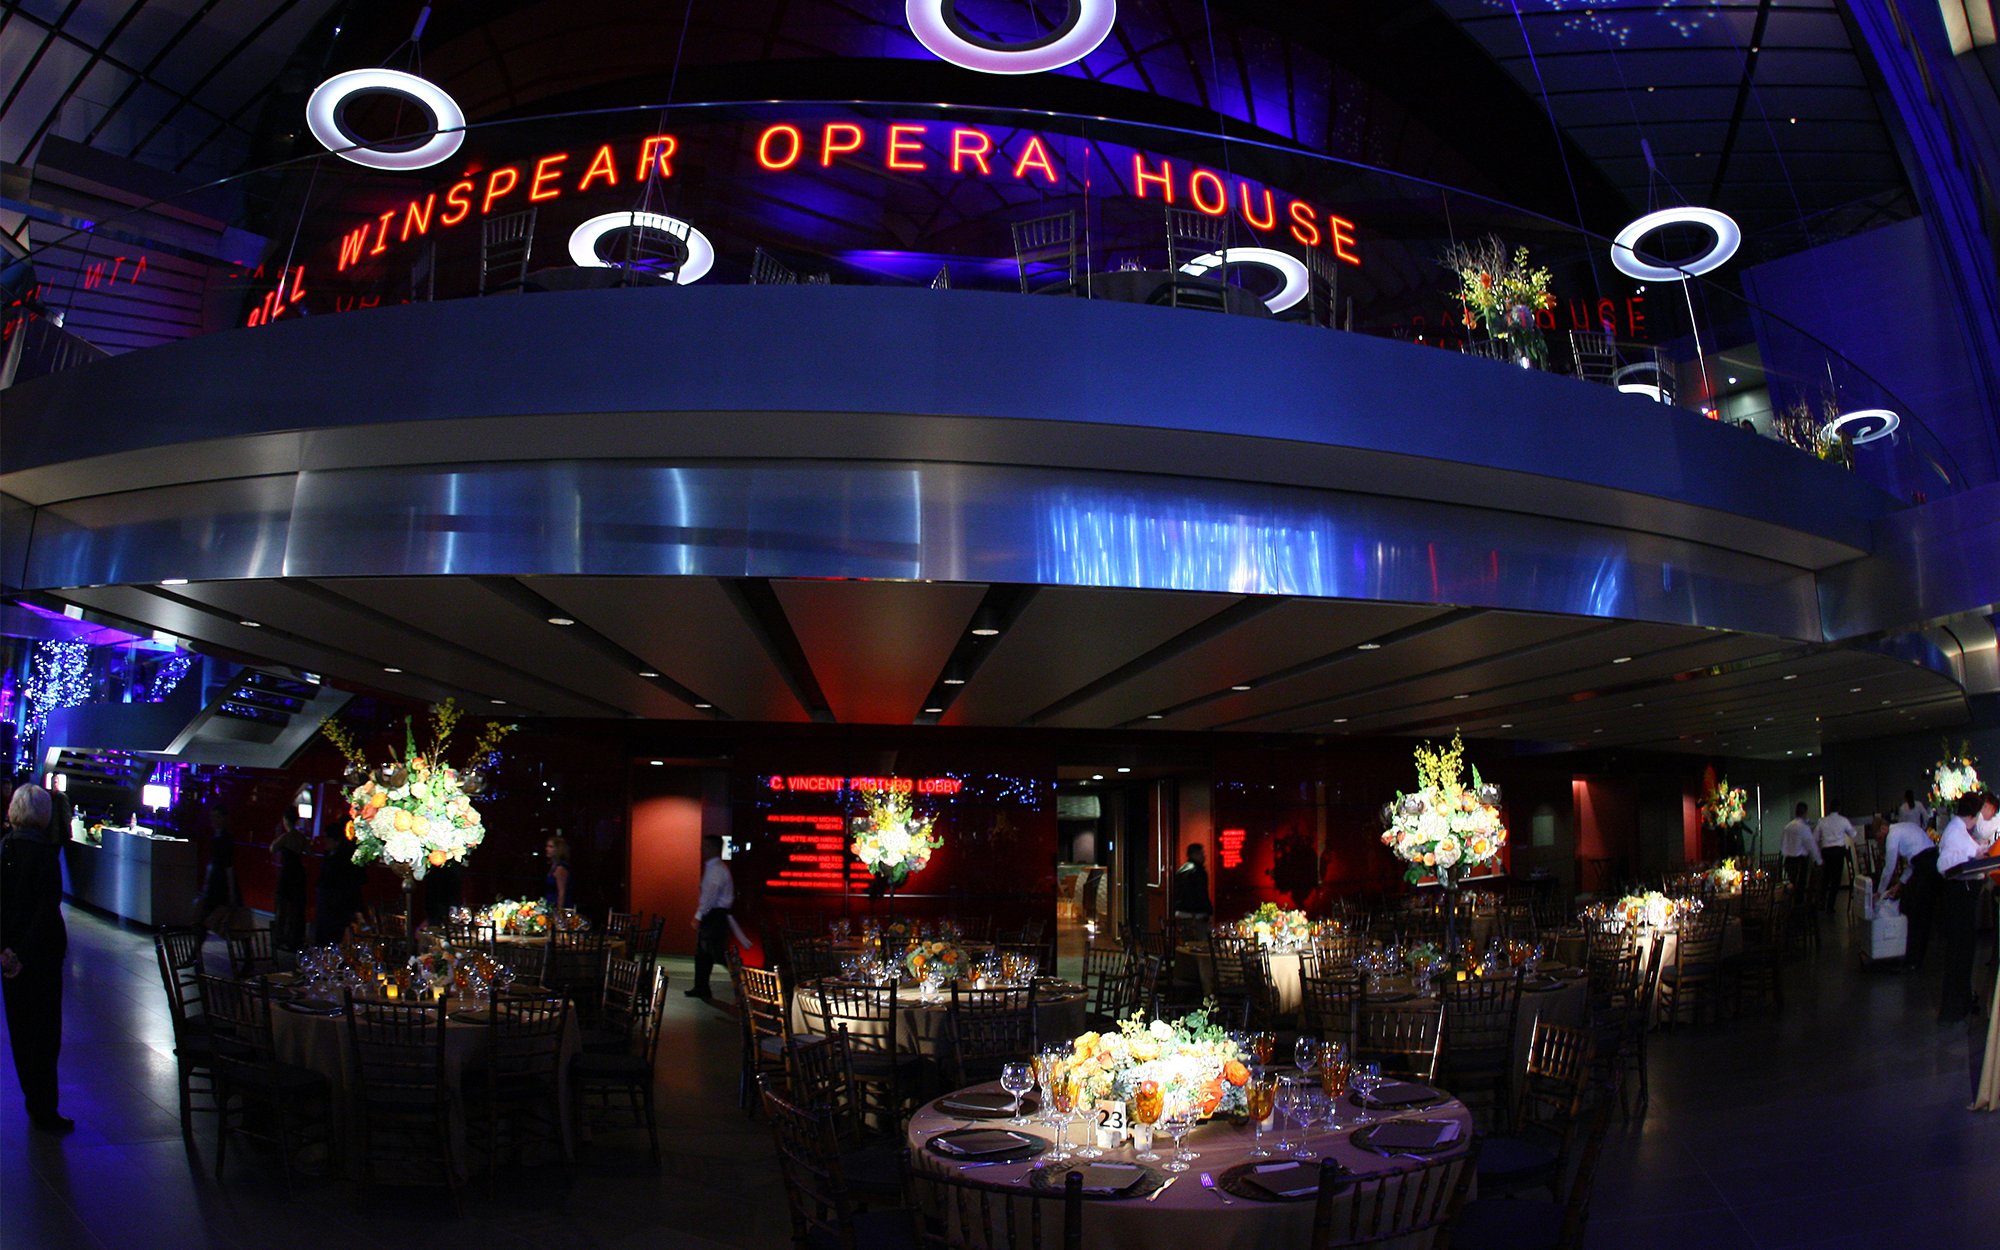 Decor Lighting at The Winspear Opera House Dallas Texas